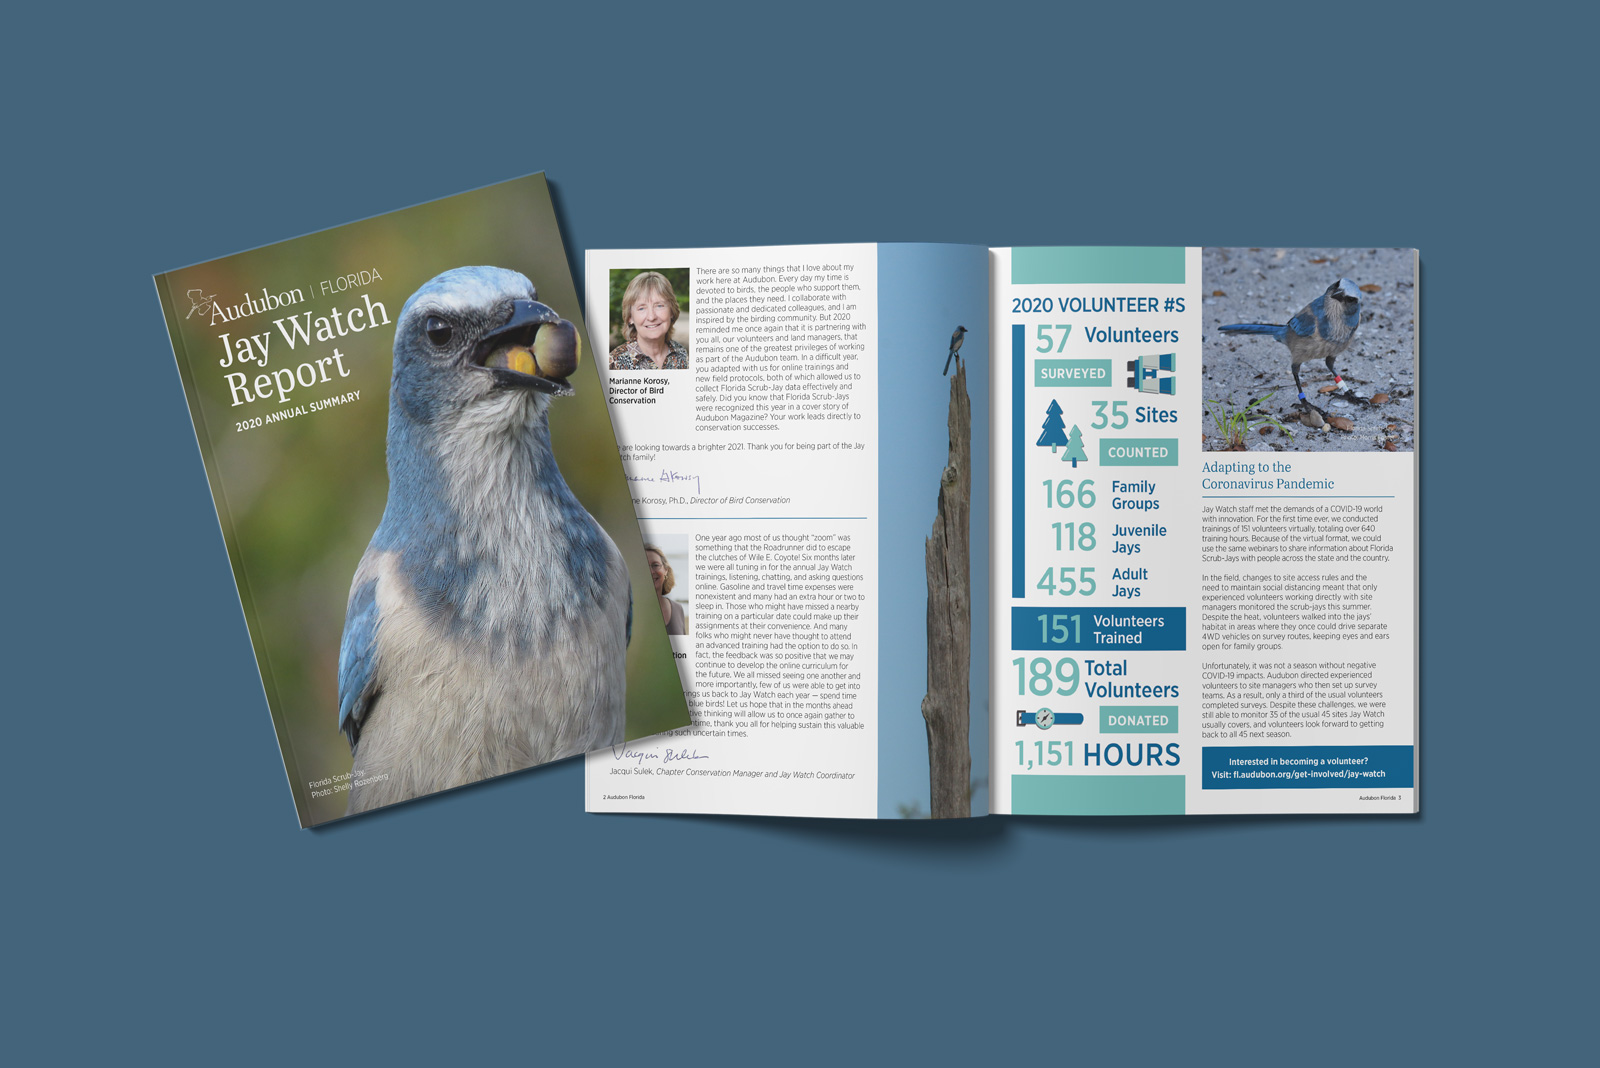 Florida Audubon Jay Watch Report Magazine Design